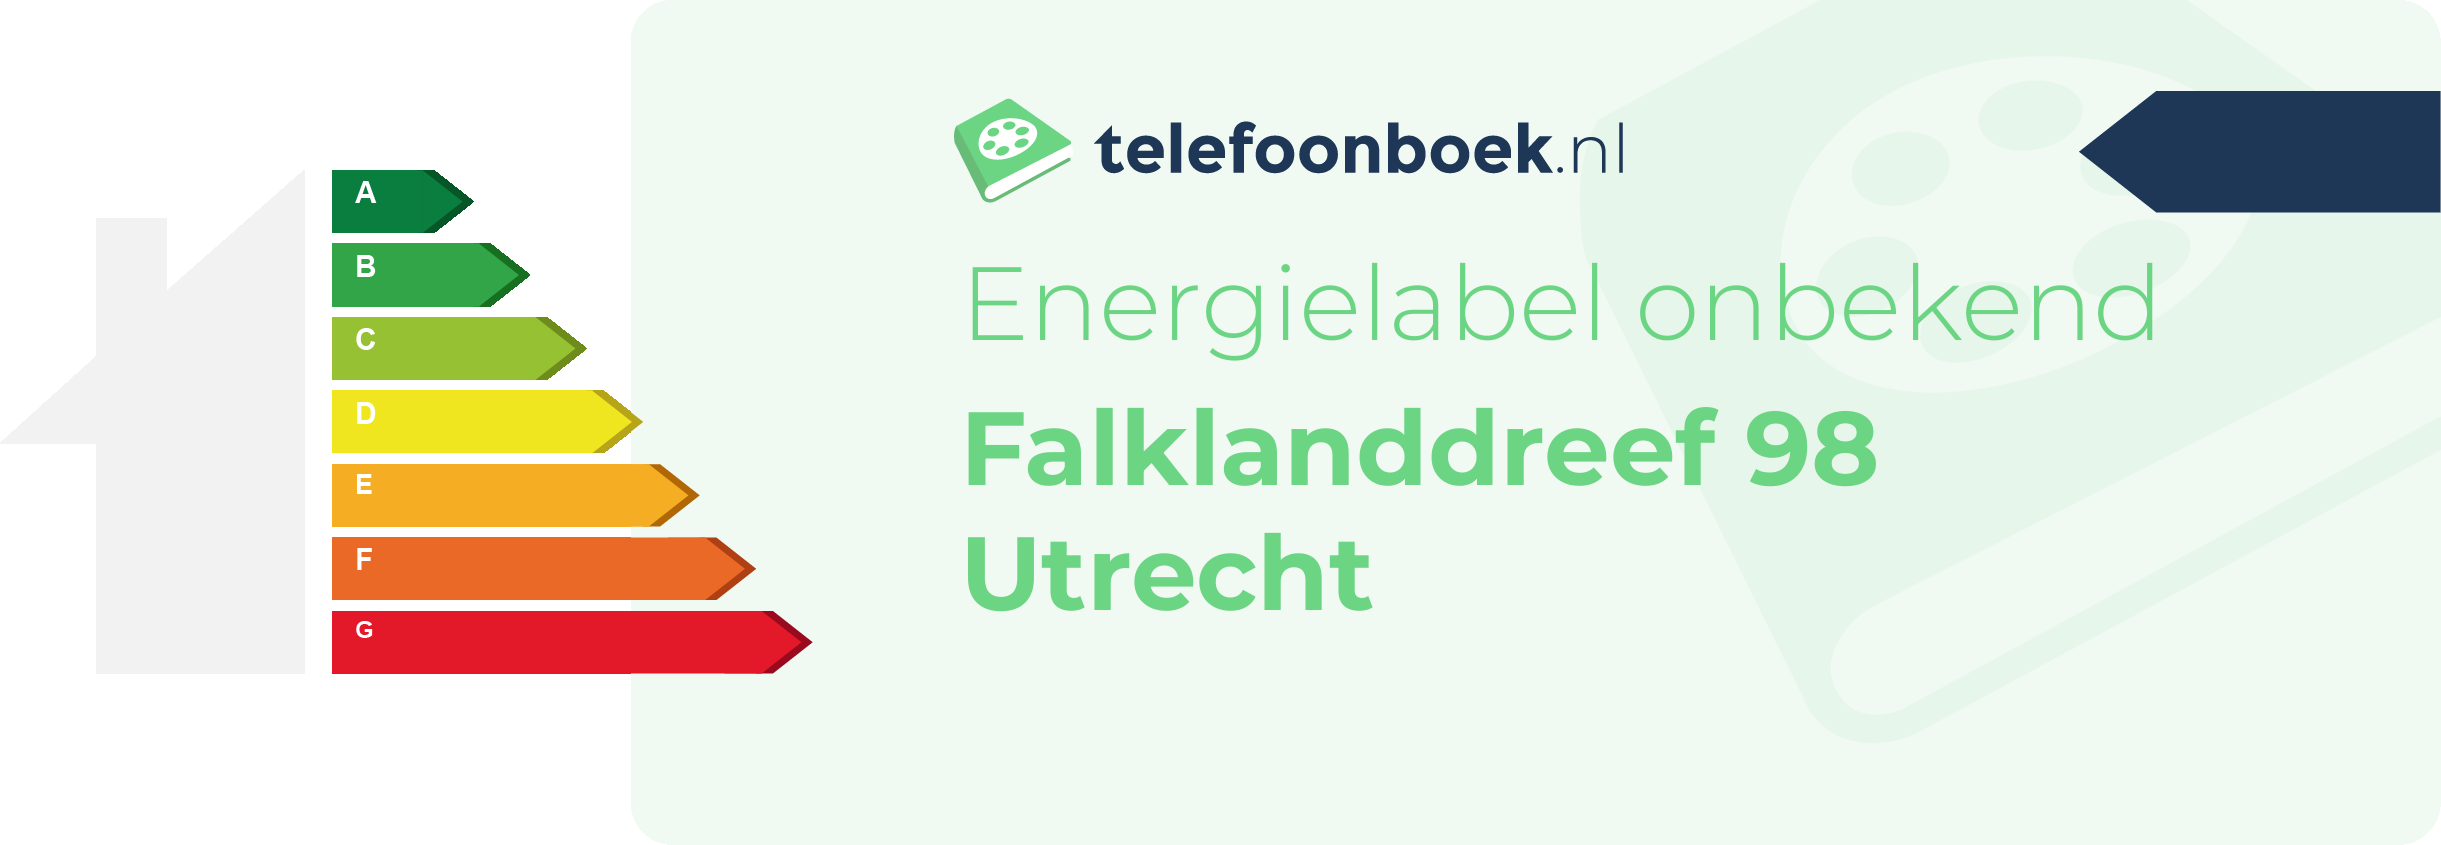 Energielabel Falklanddreef 98 Utrecht